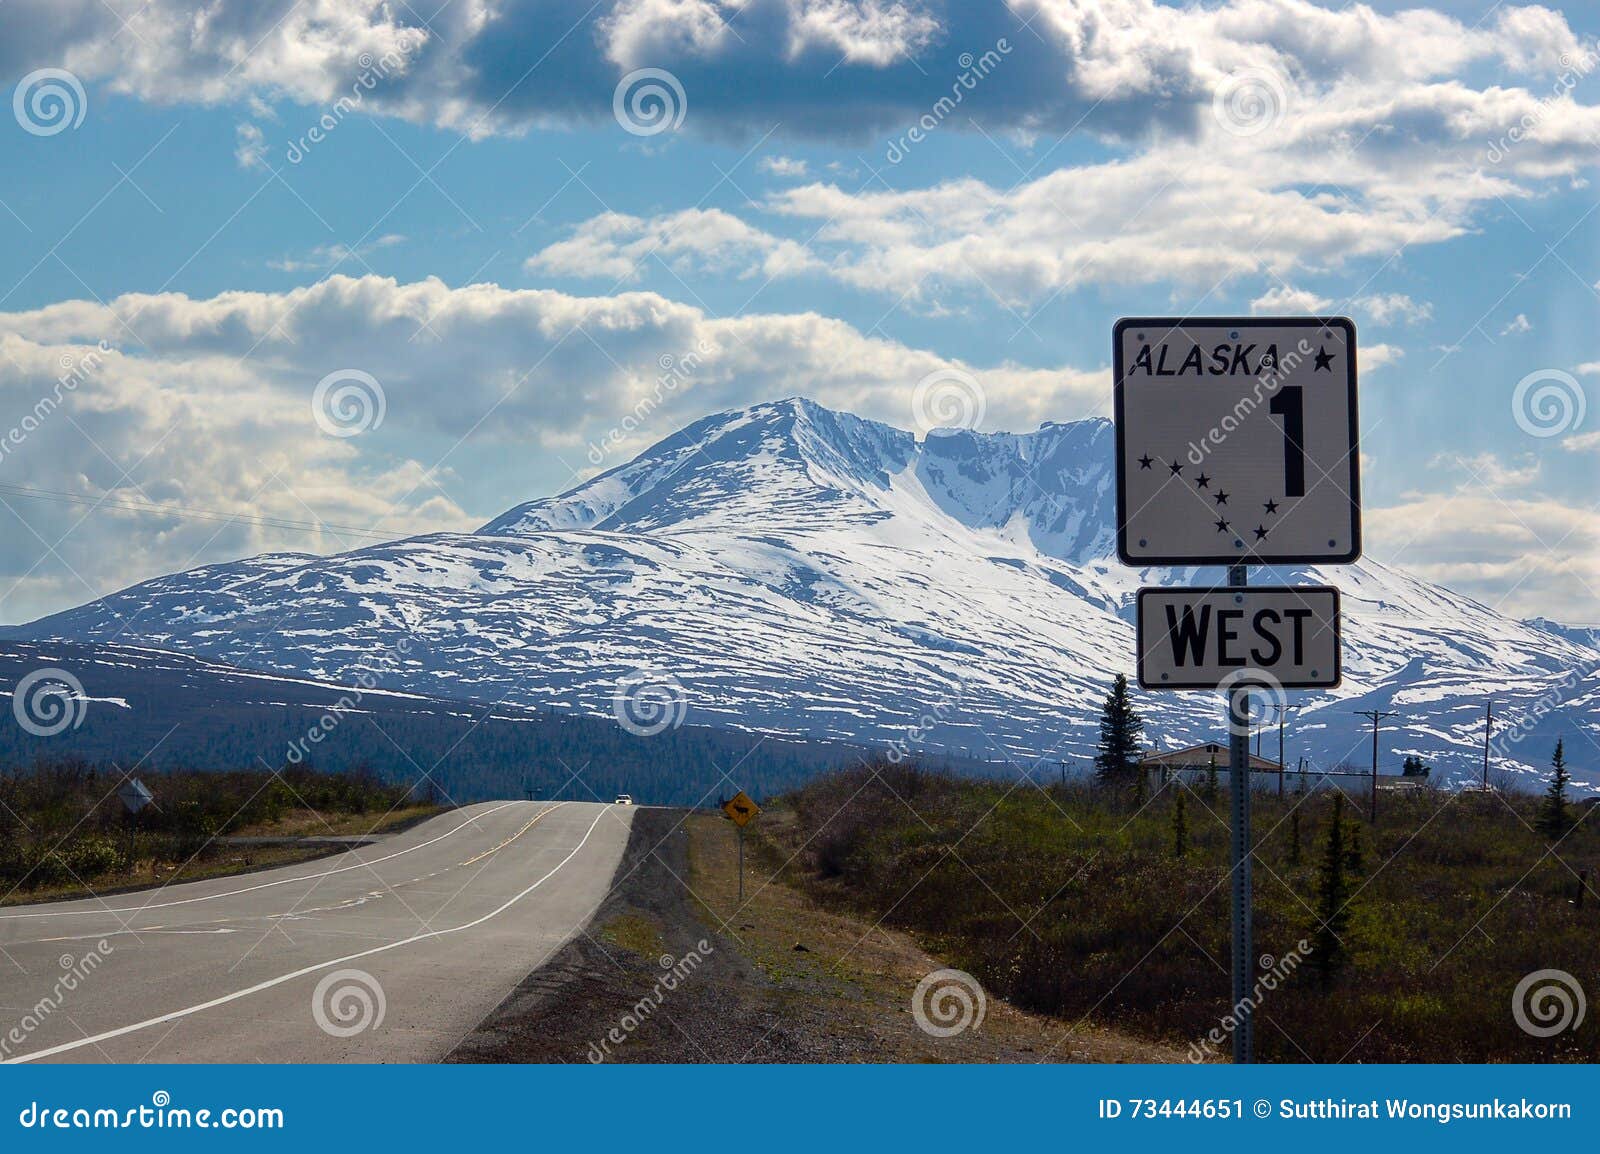 alaska road sign on glenn highway